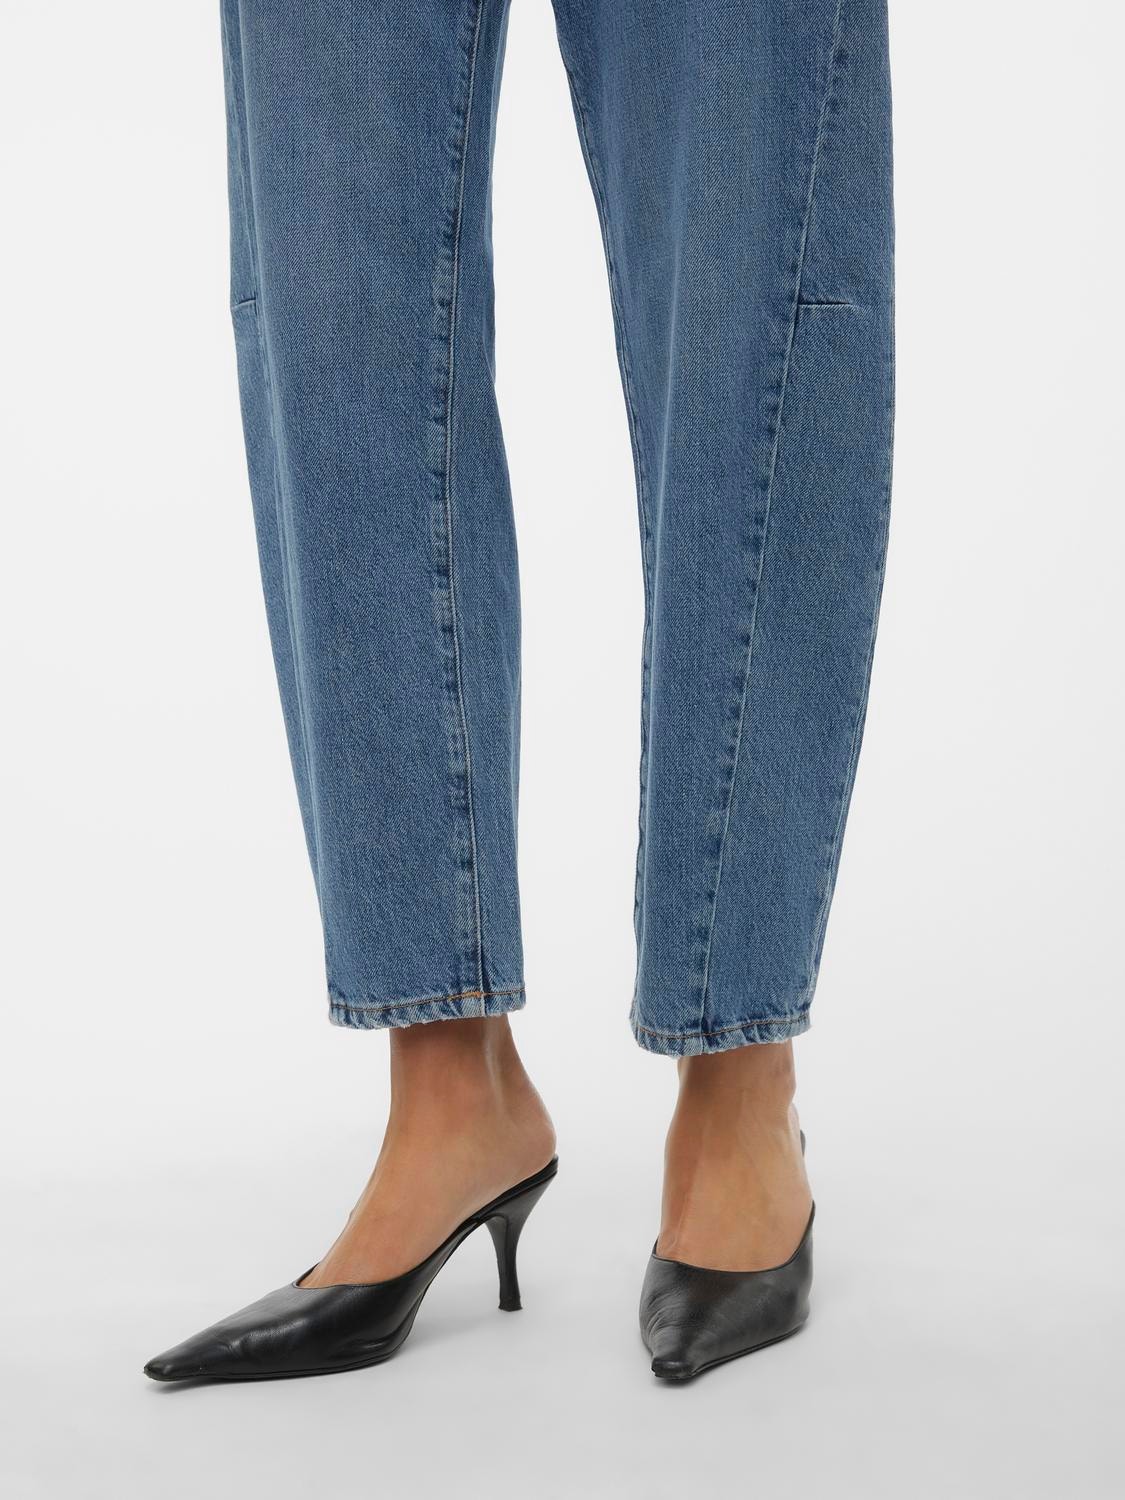 Vero Moda VMELLIE Mom fit Jeans -Medium Blue Denim - 10305392